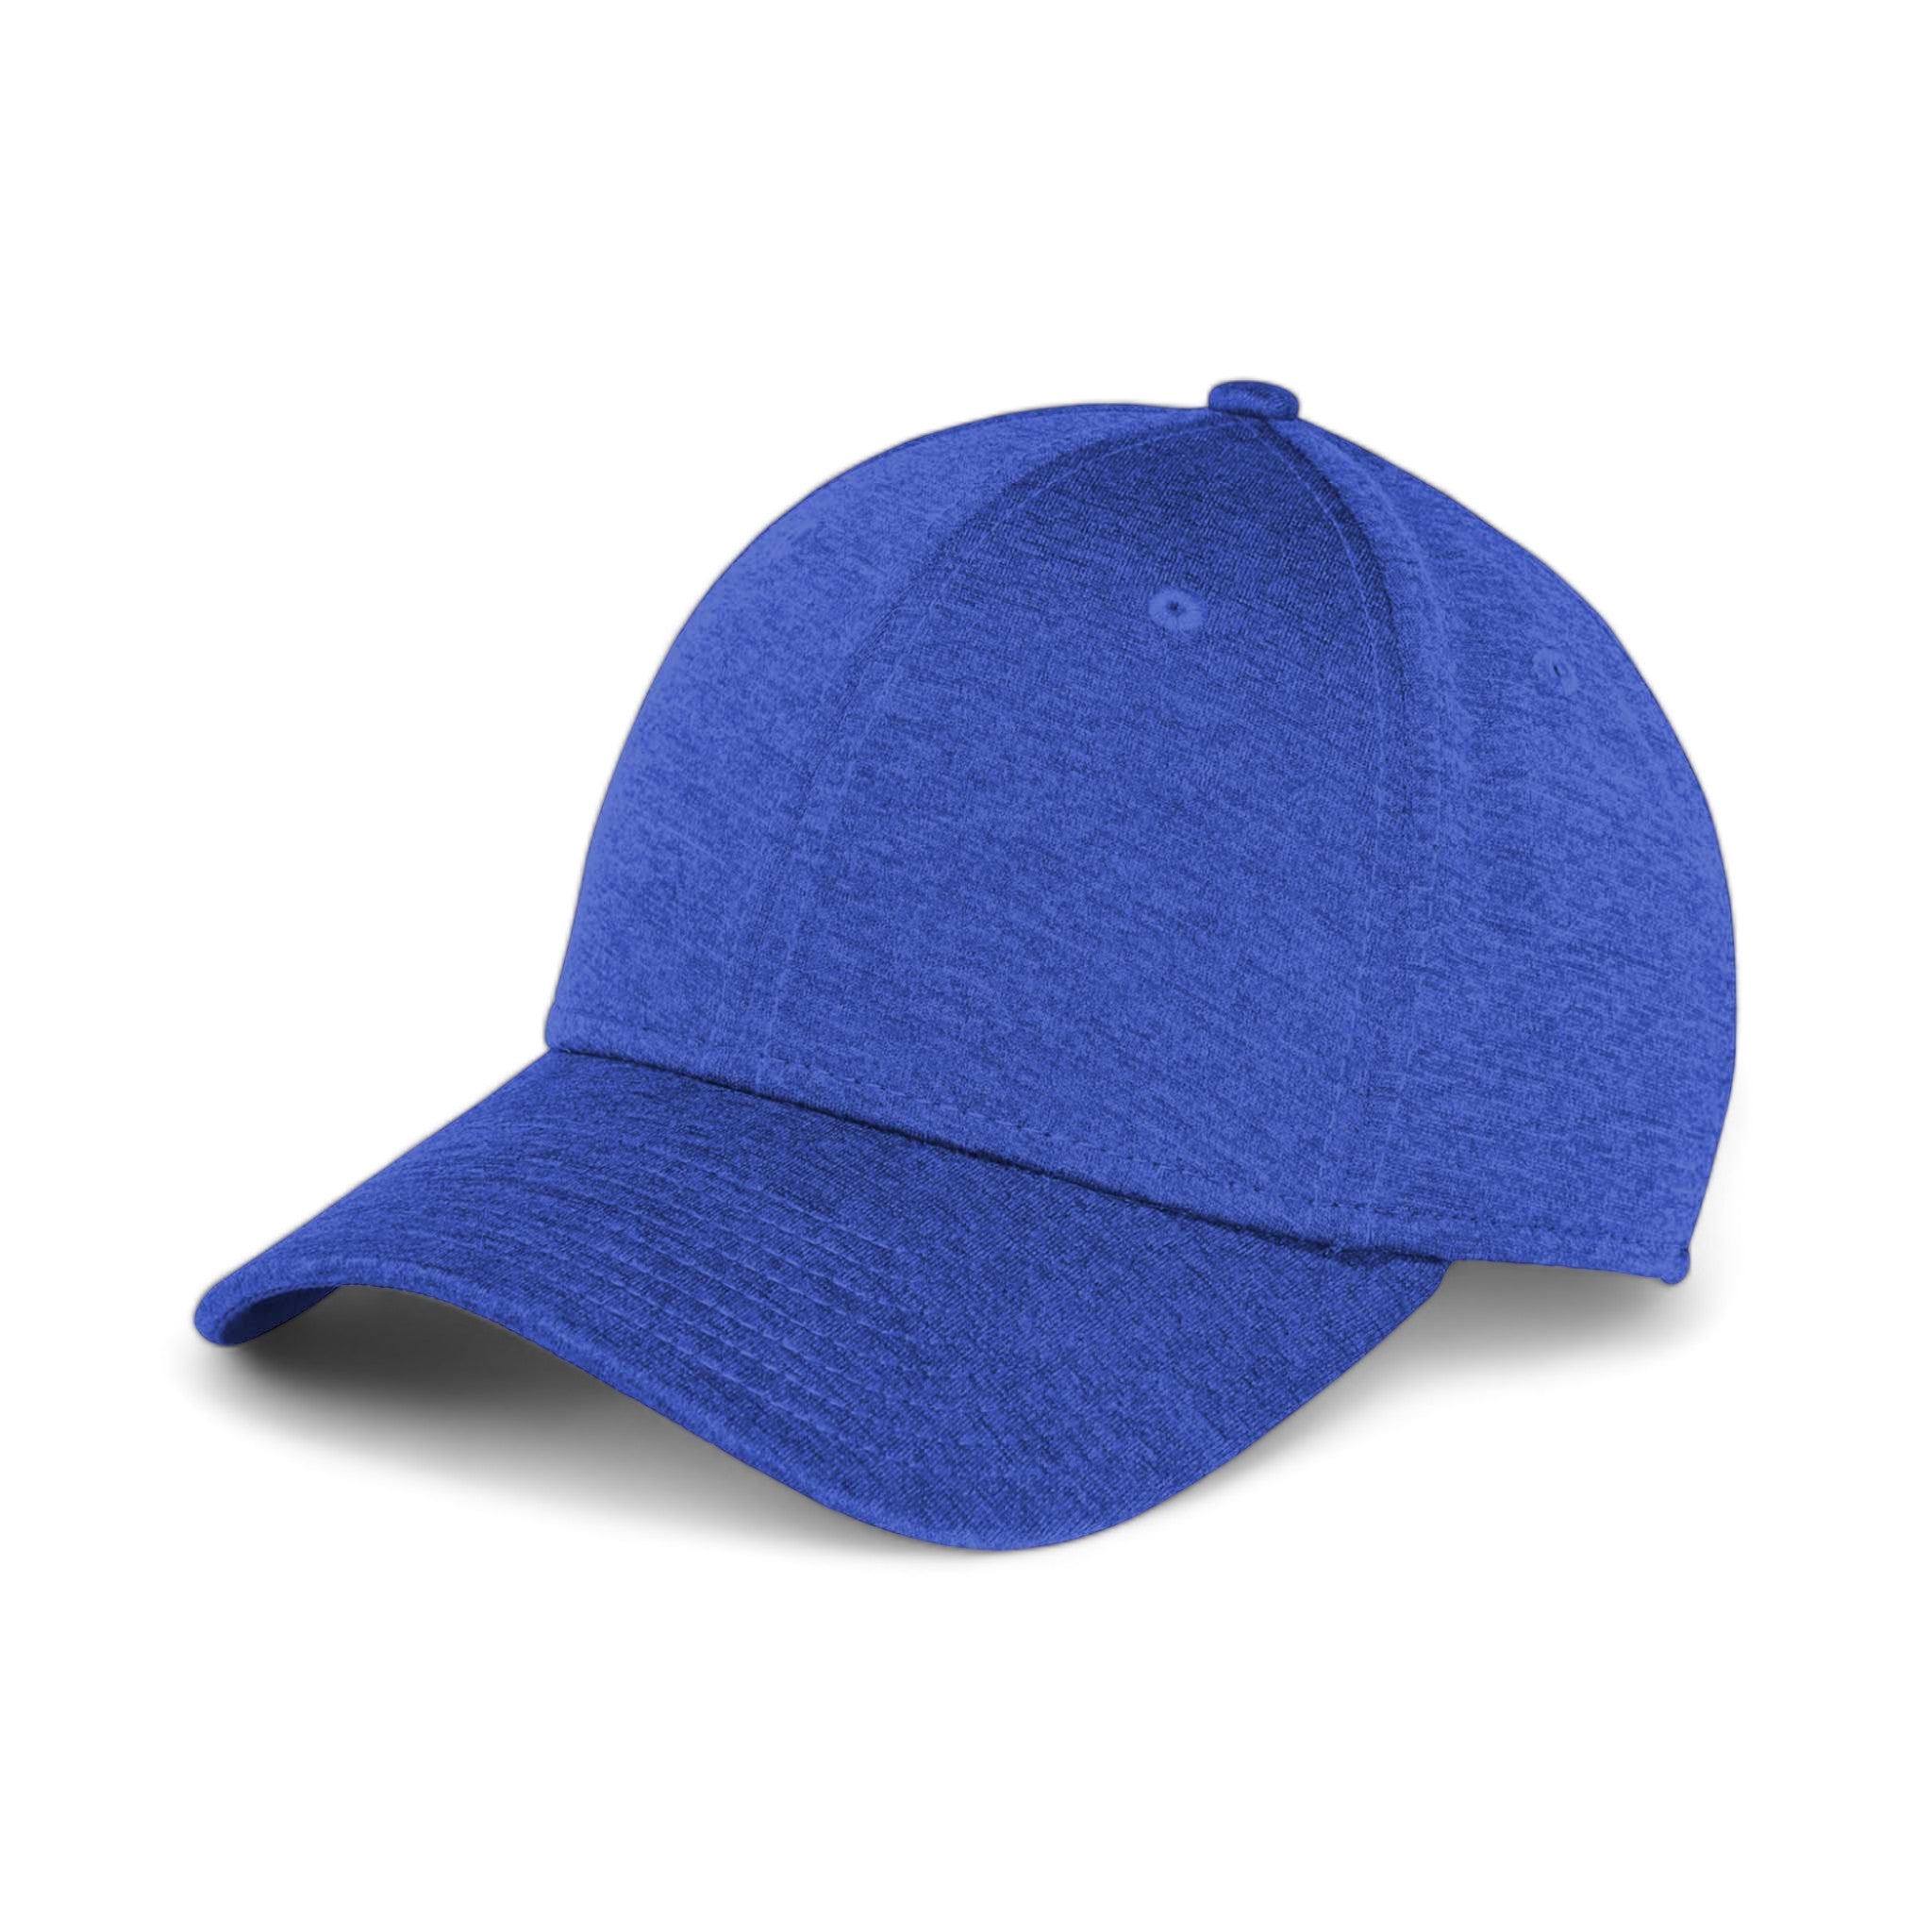 Side view of New Era NE703 custom hat in royal shadow heather